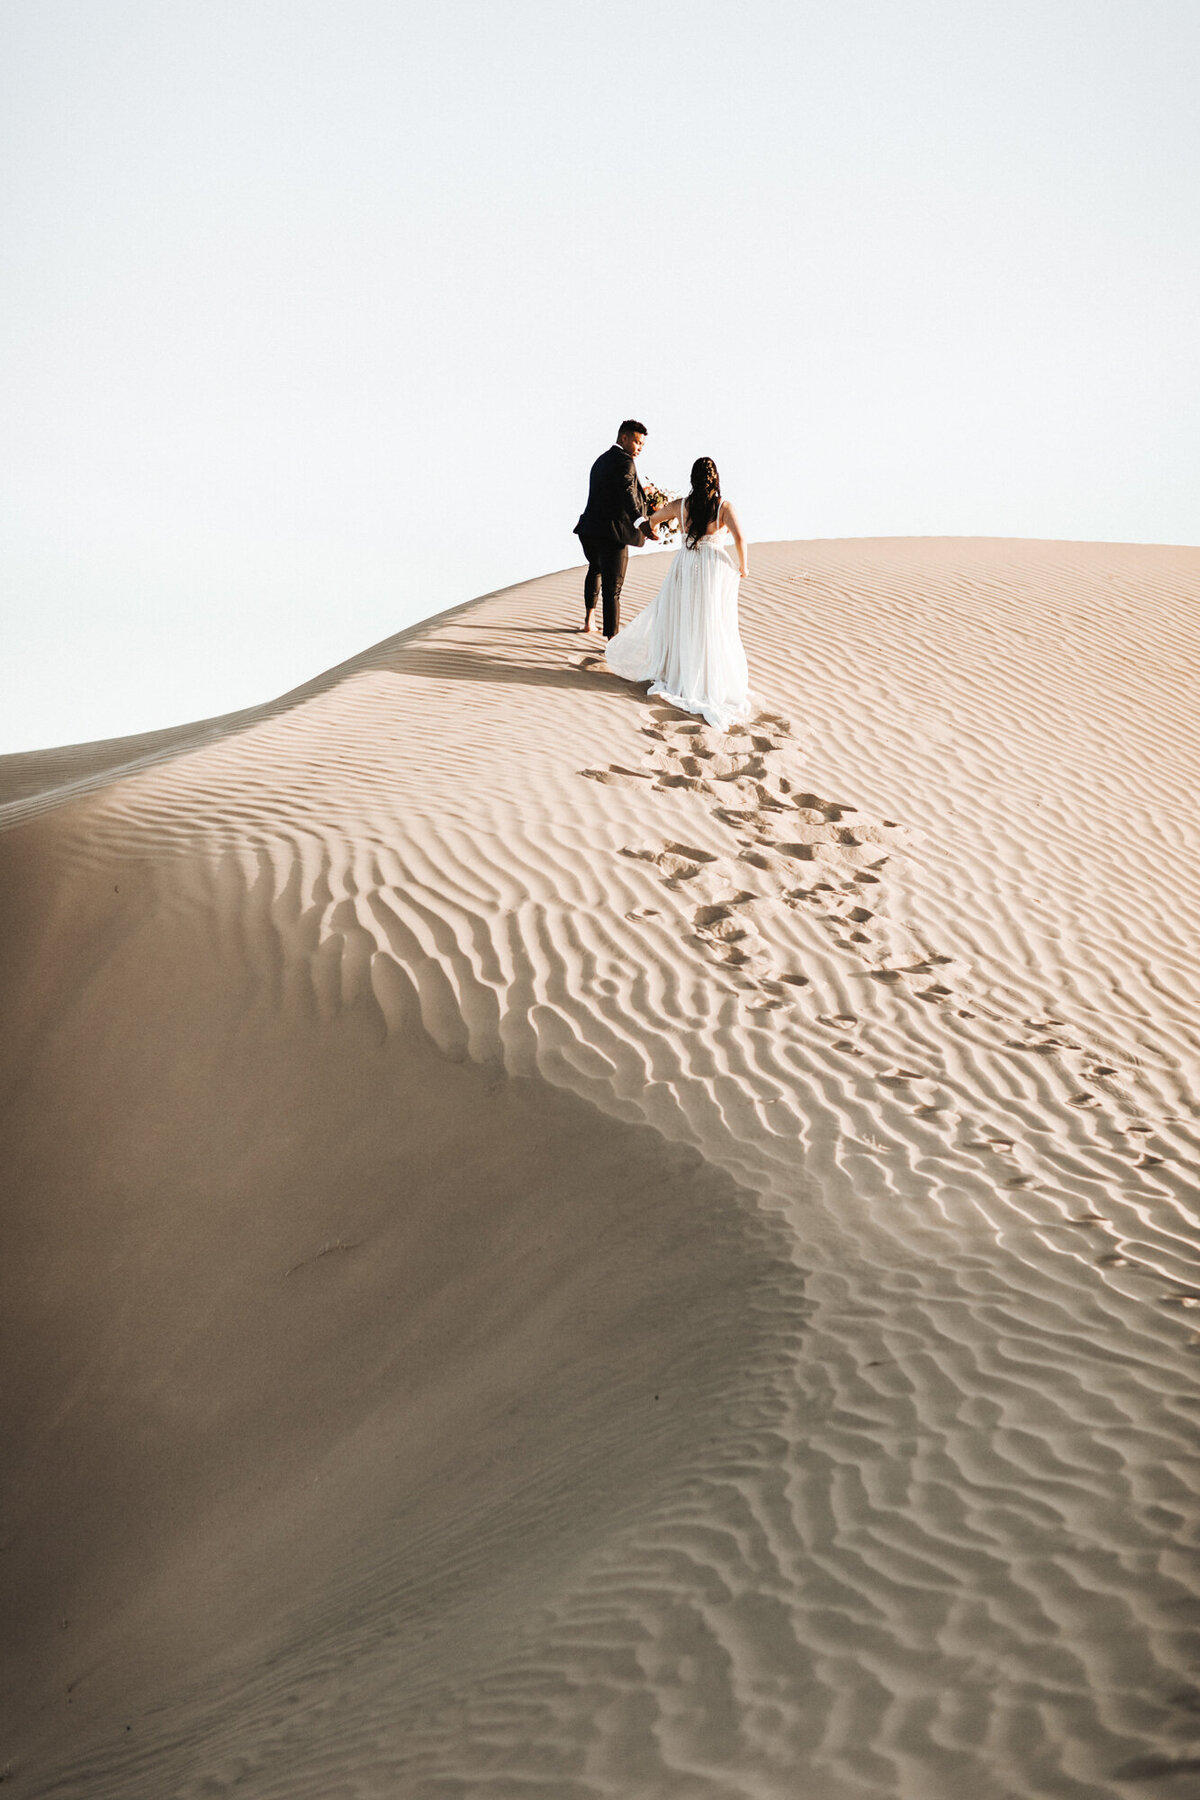 Couple wearing wedding attire climbing a sand dune.